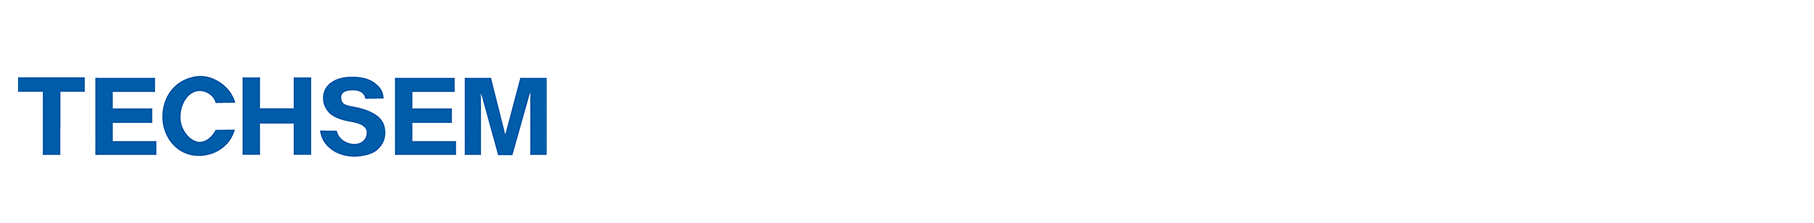 TECHSEM Logo